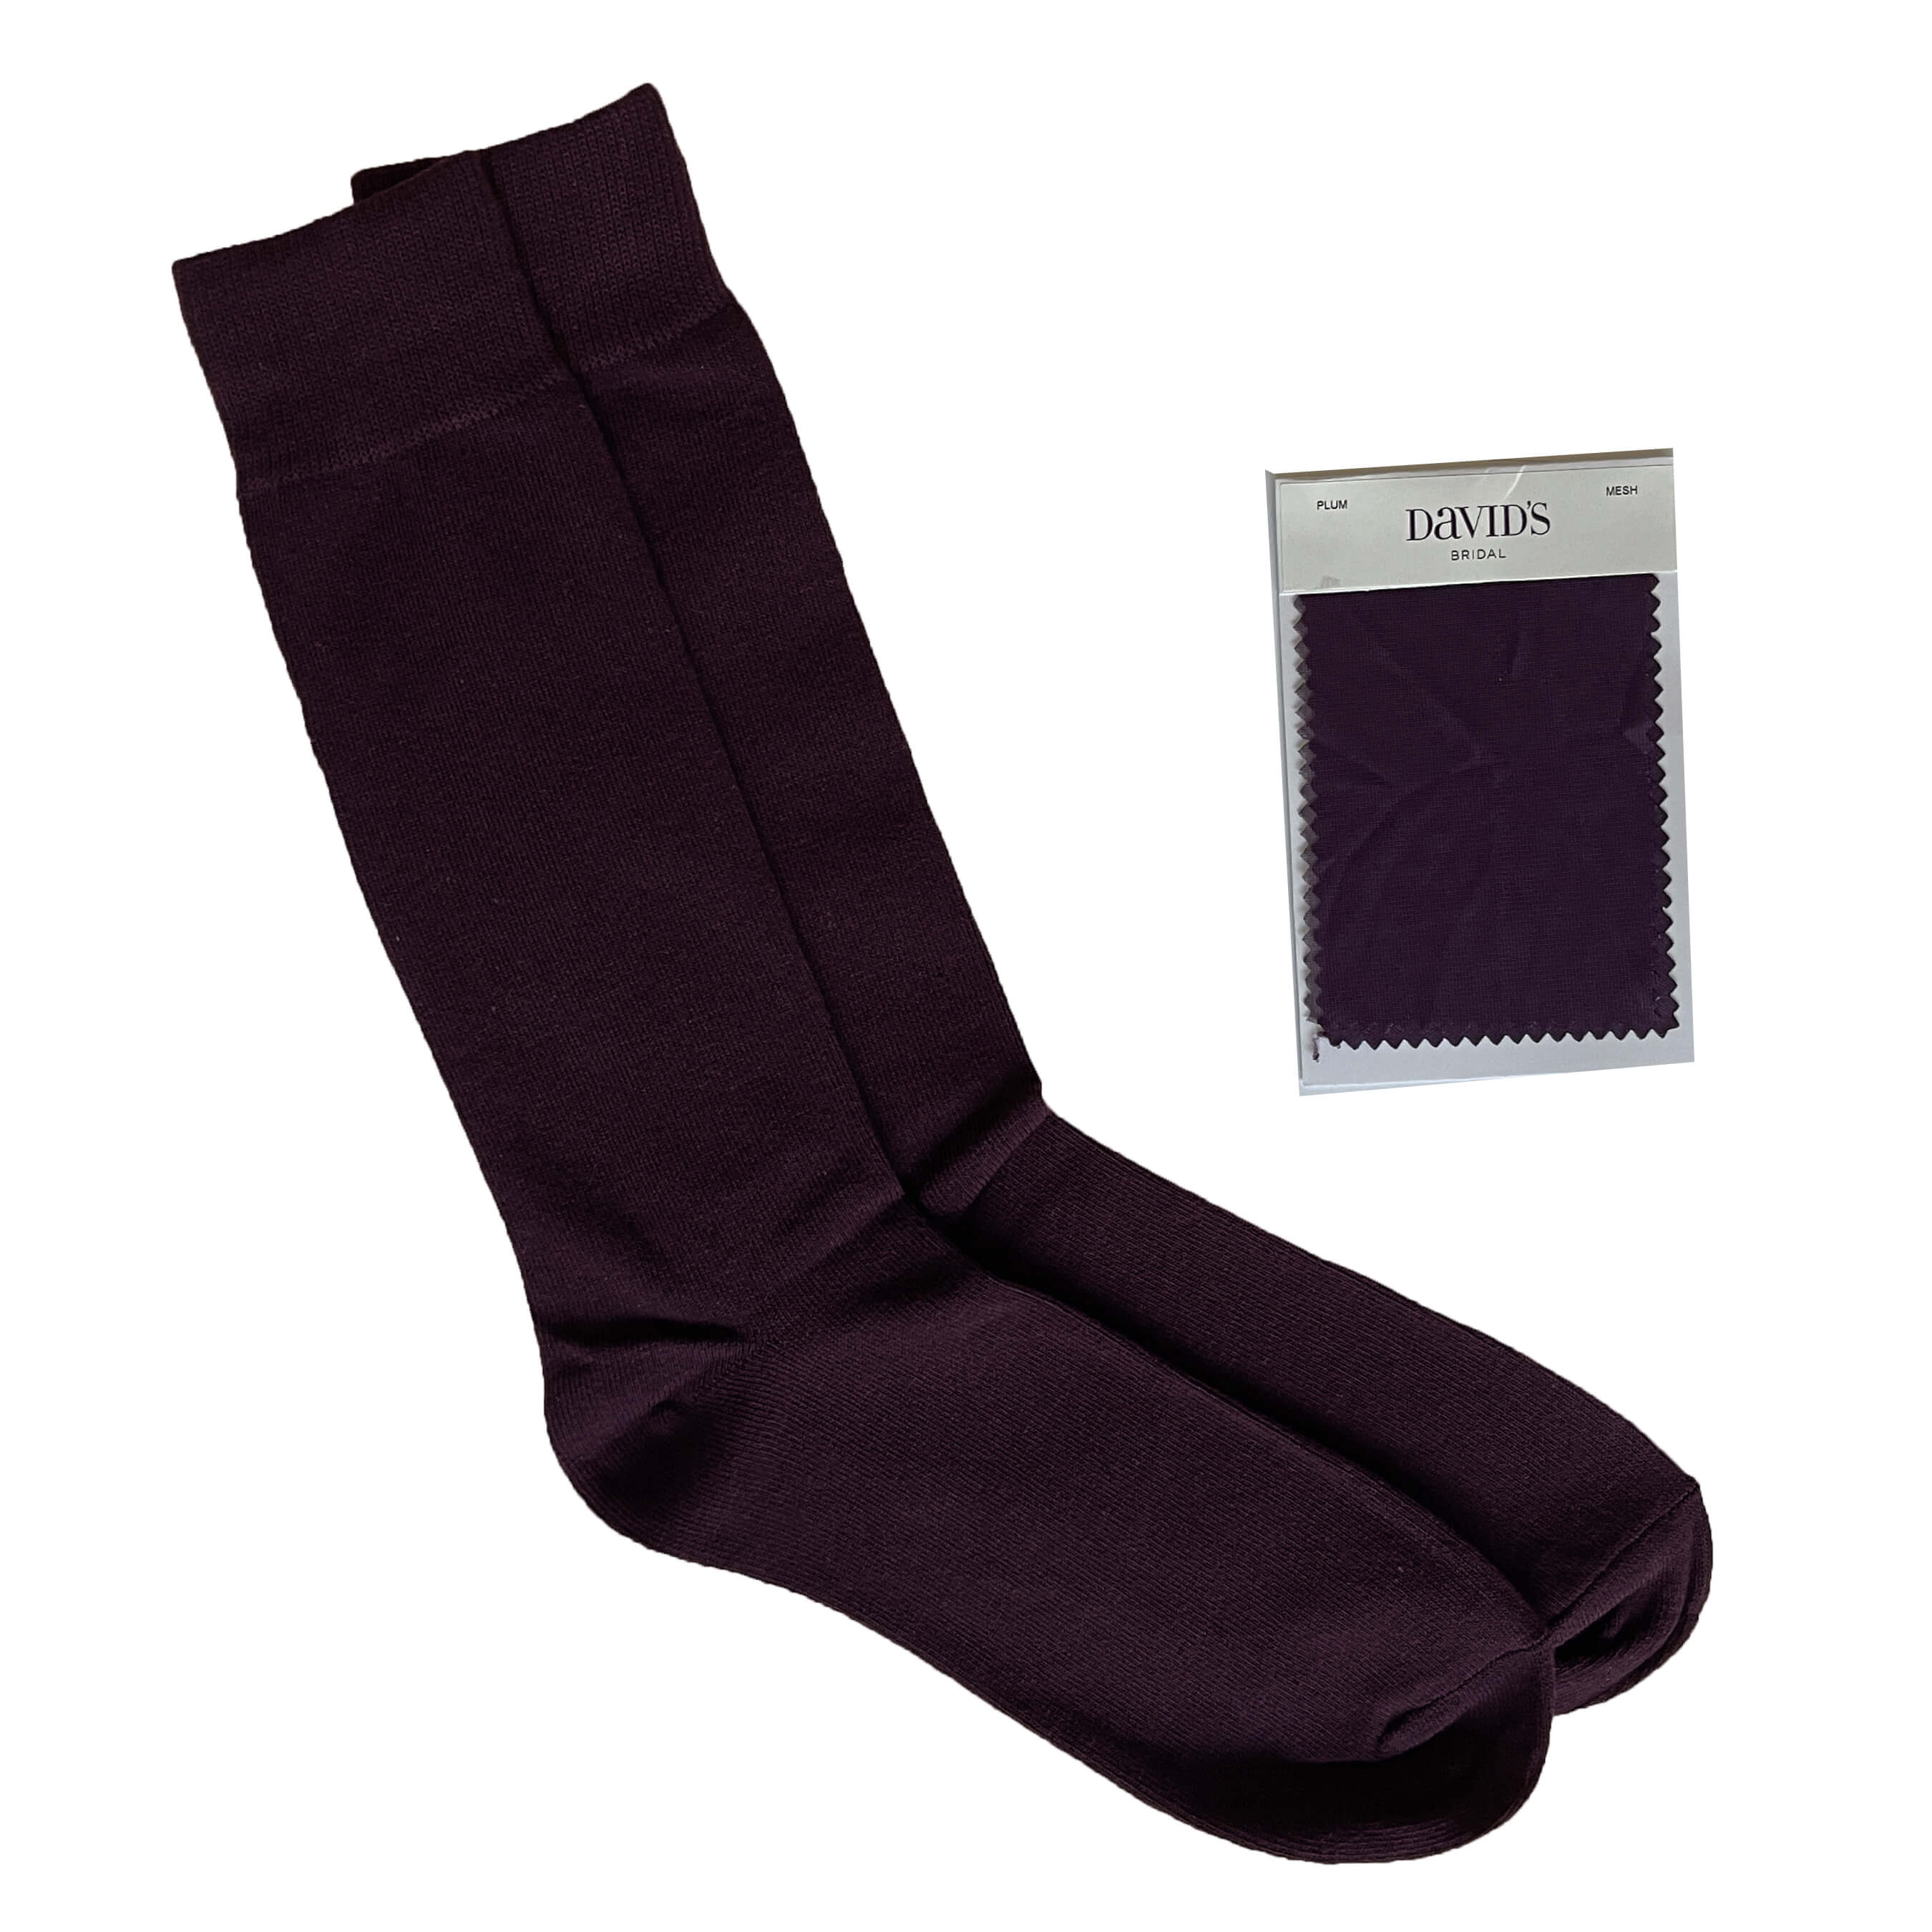 Similar to PLUM (David's Bridal) Mens/Groomsmen Dress Socks